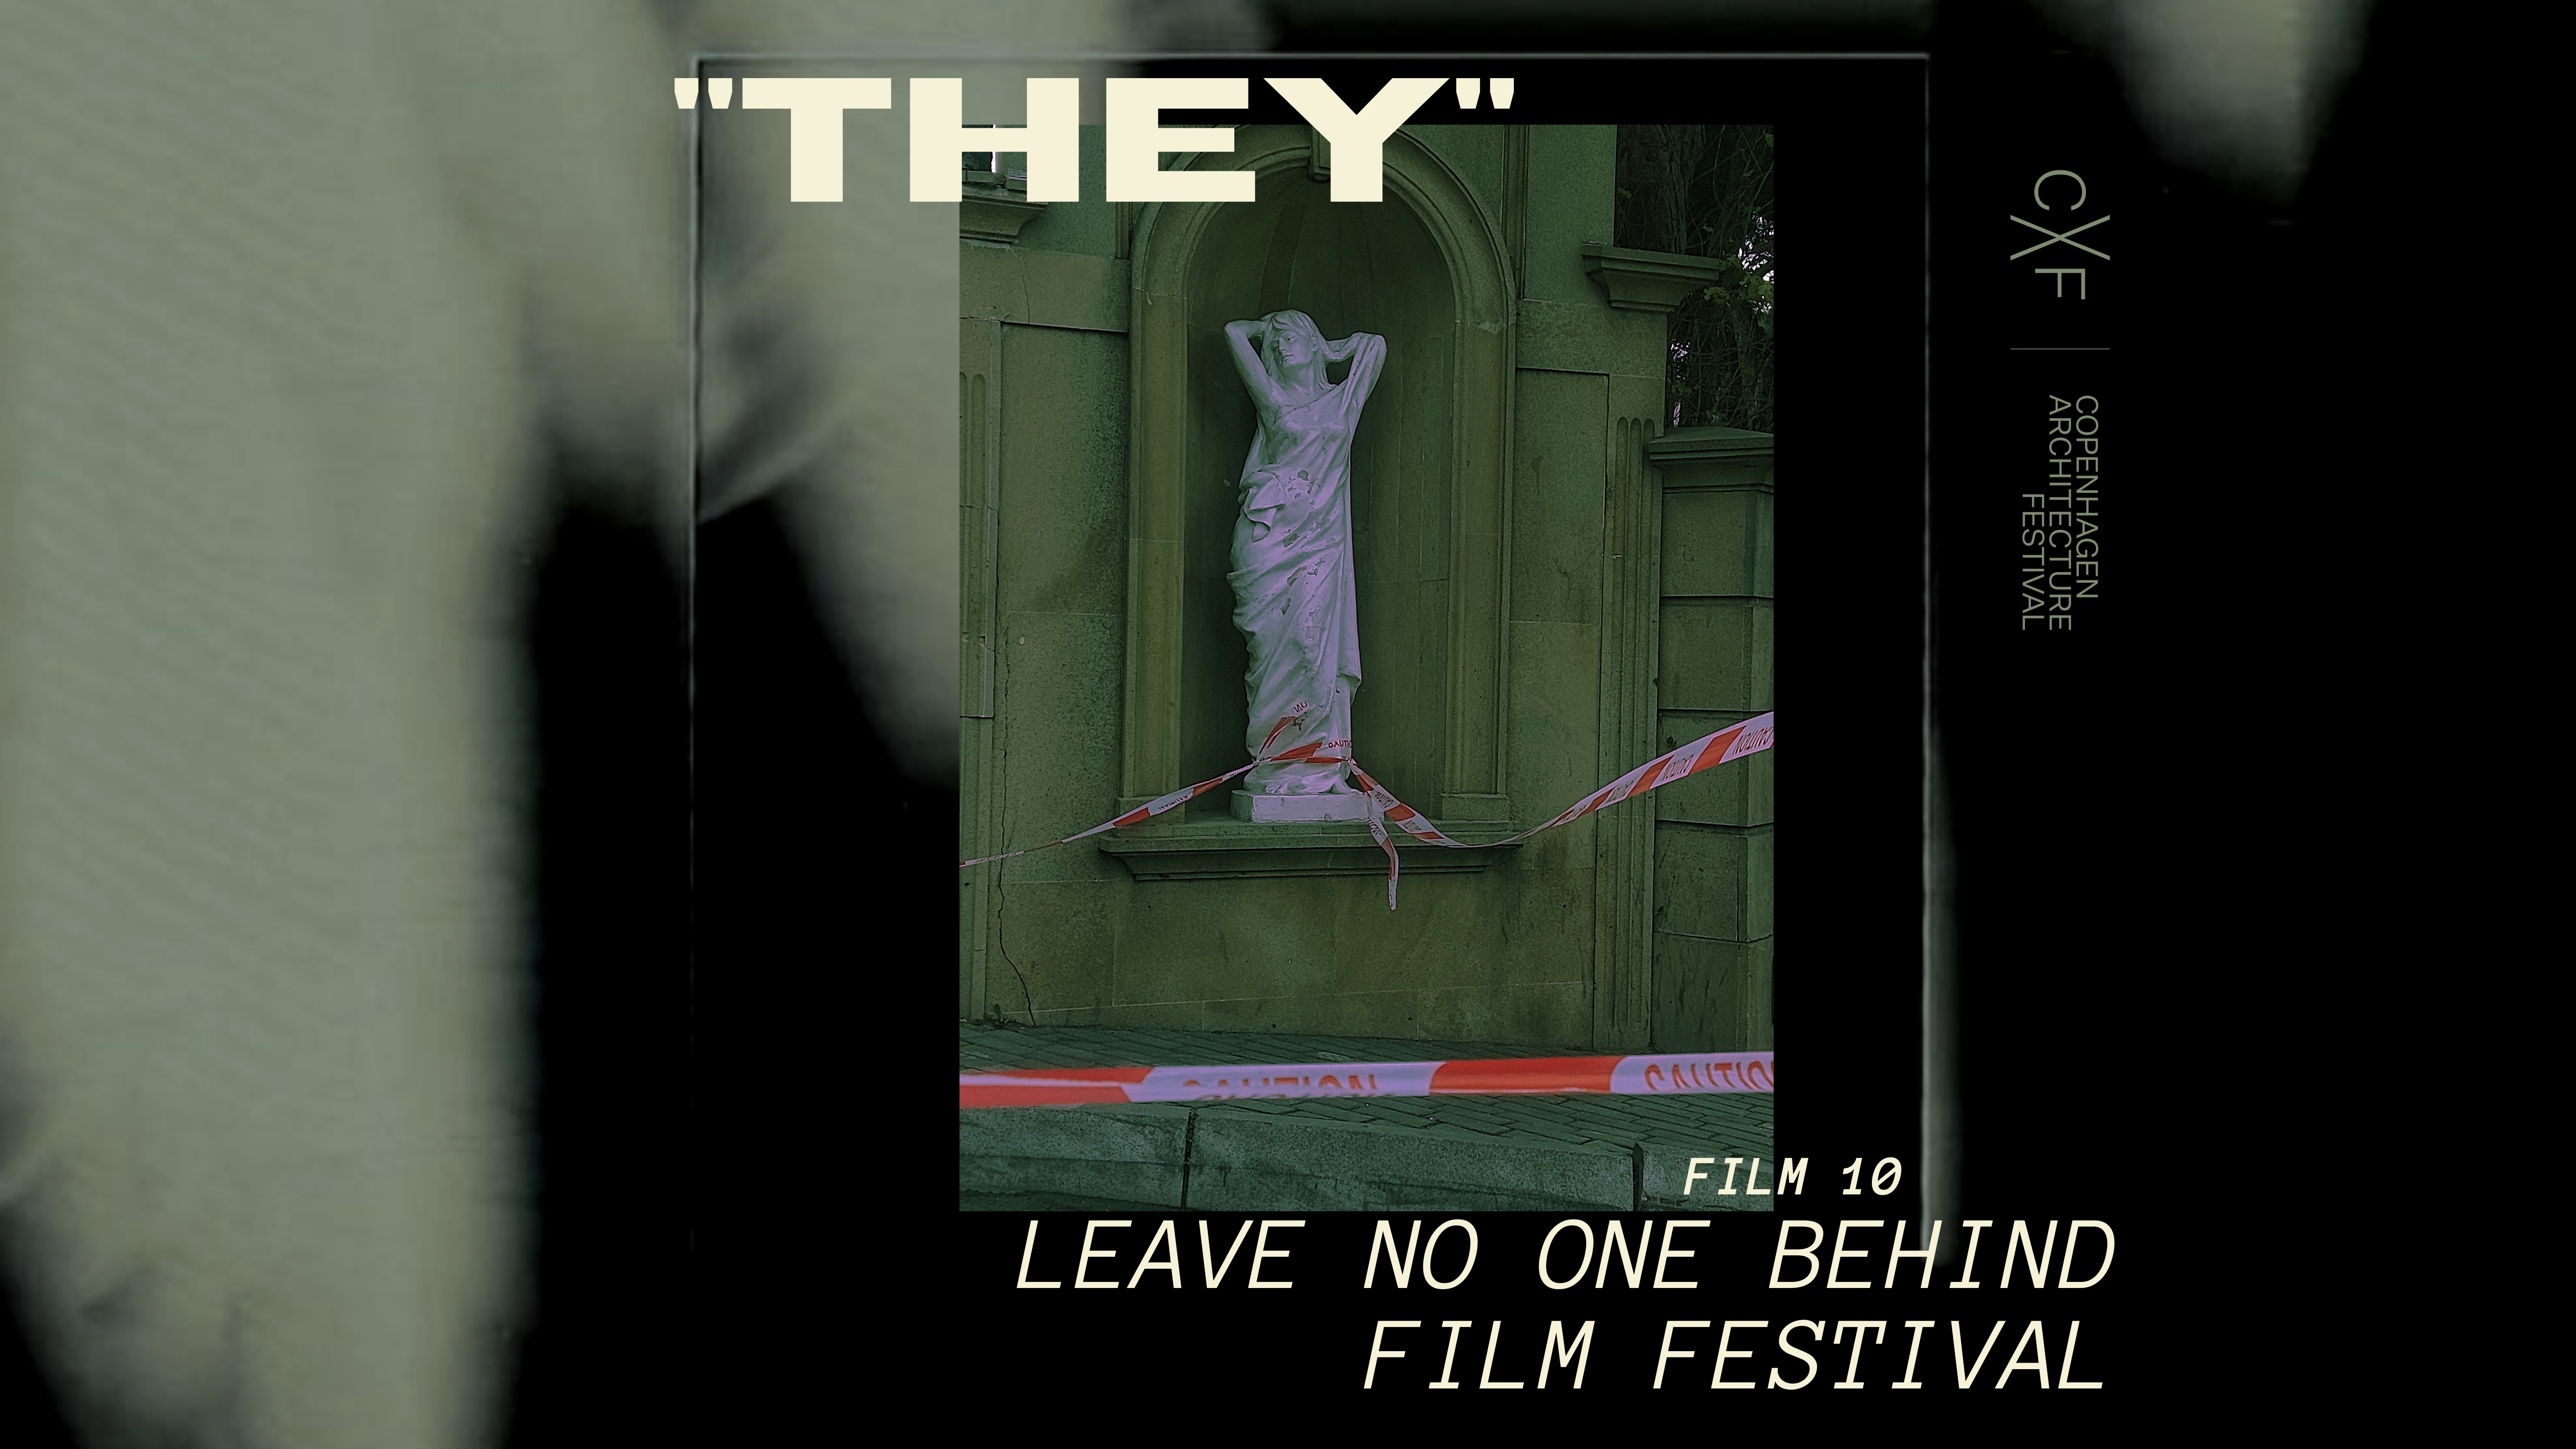 LNOB Film 10: “They”